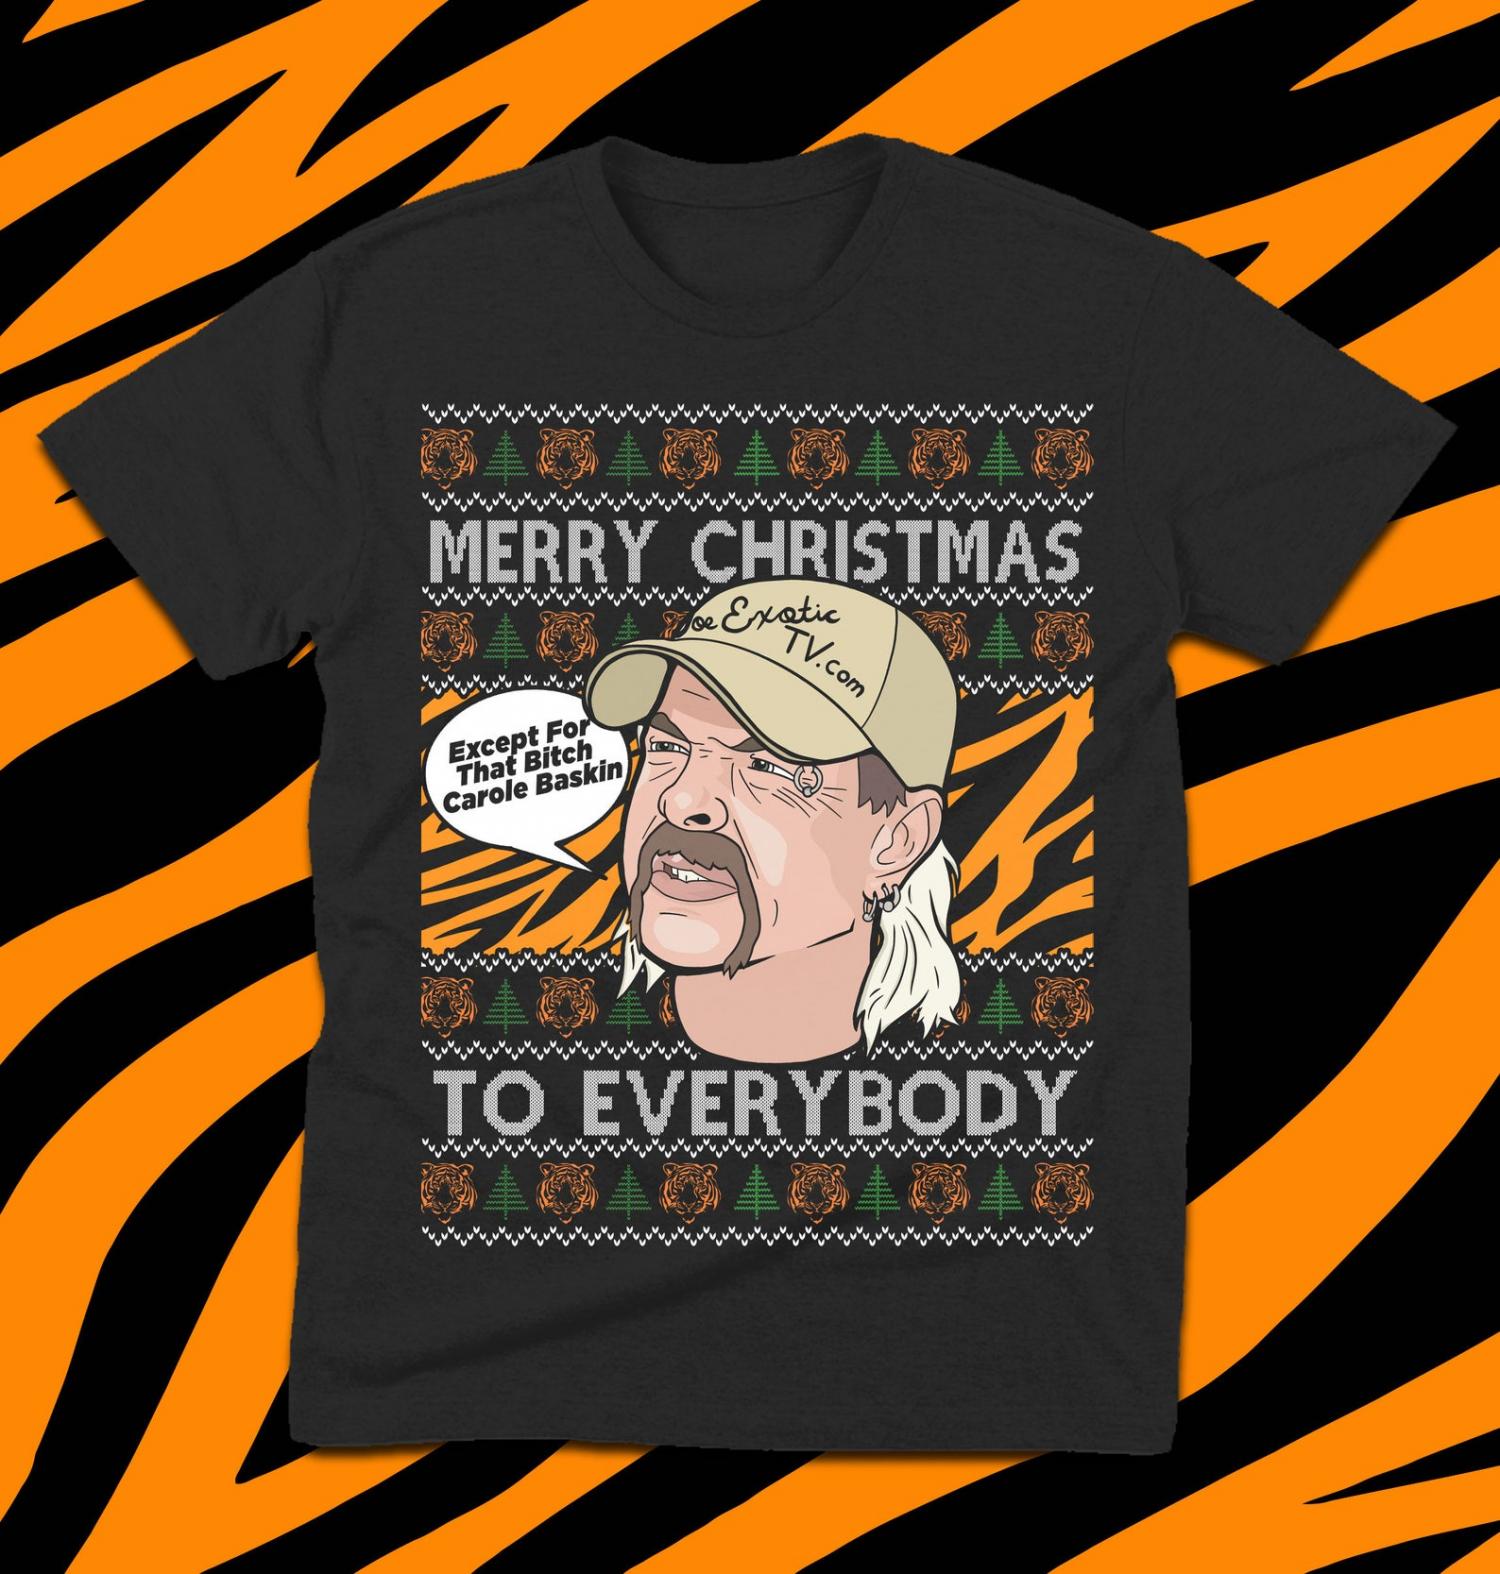 Merry Christmas To Everyone Except Carol Baskin - Joe Exotic T-Shirt